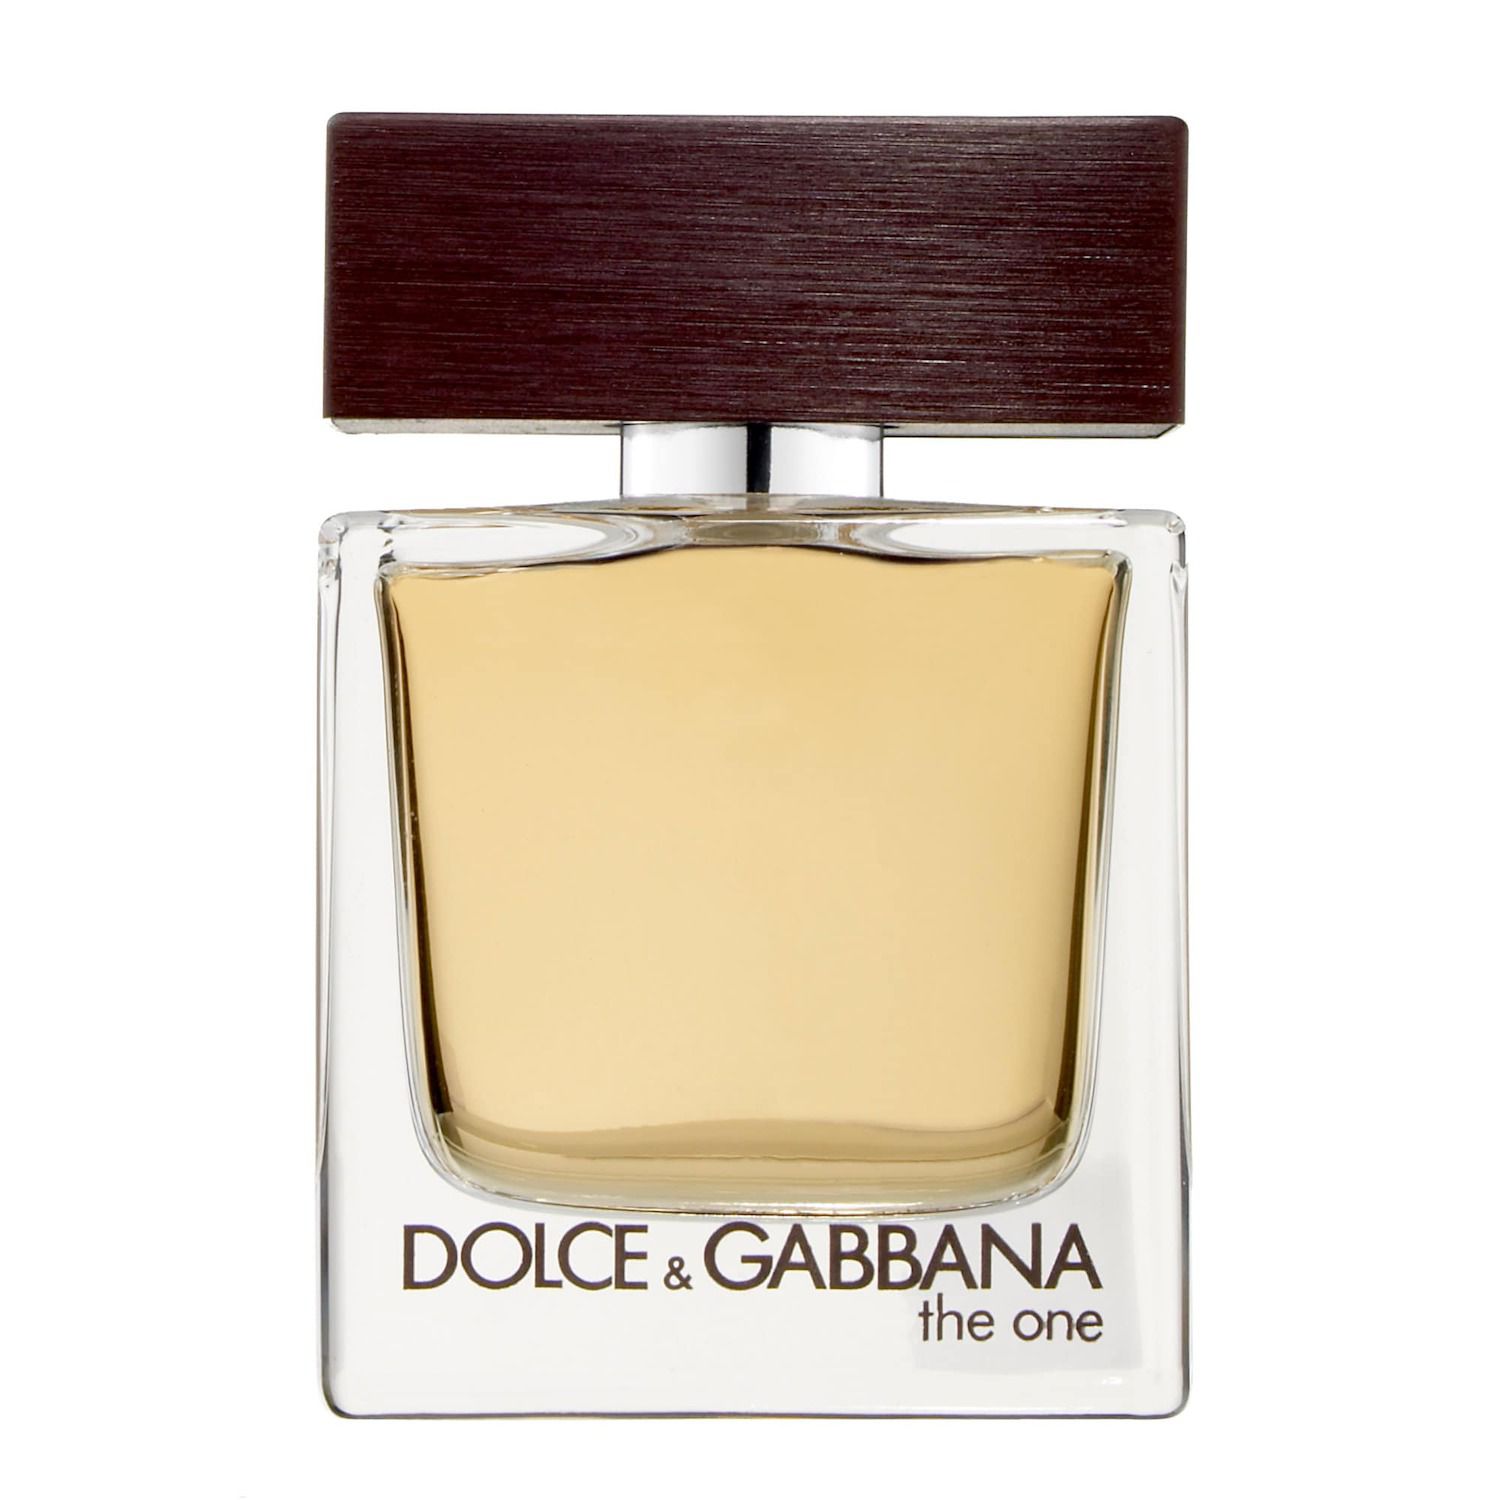 Dolce \u0026 Gabbana The One Men's Cologne 